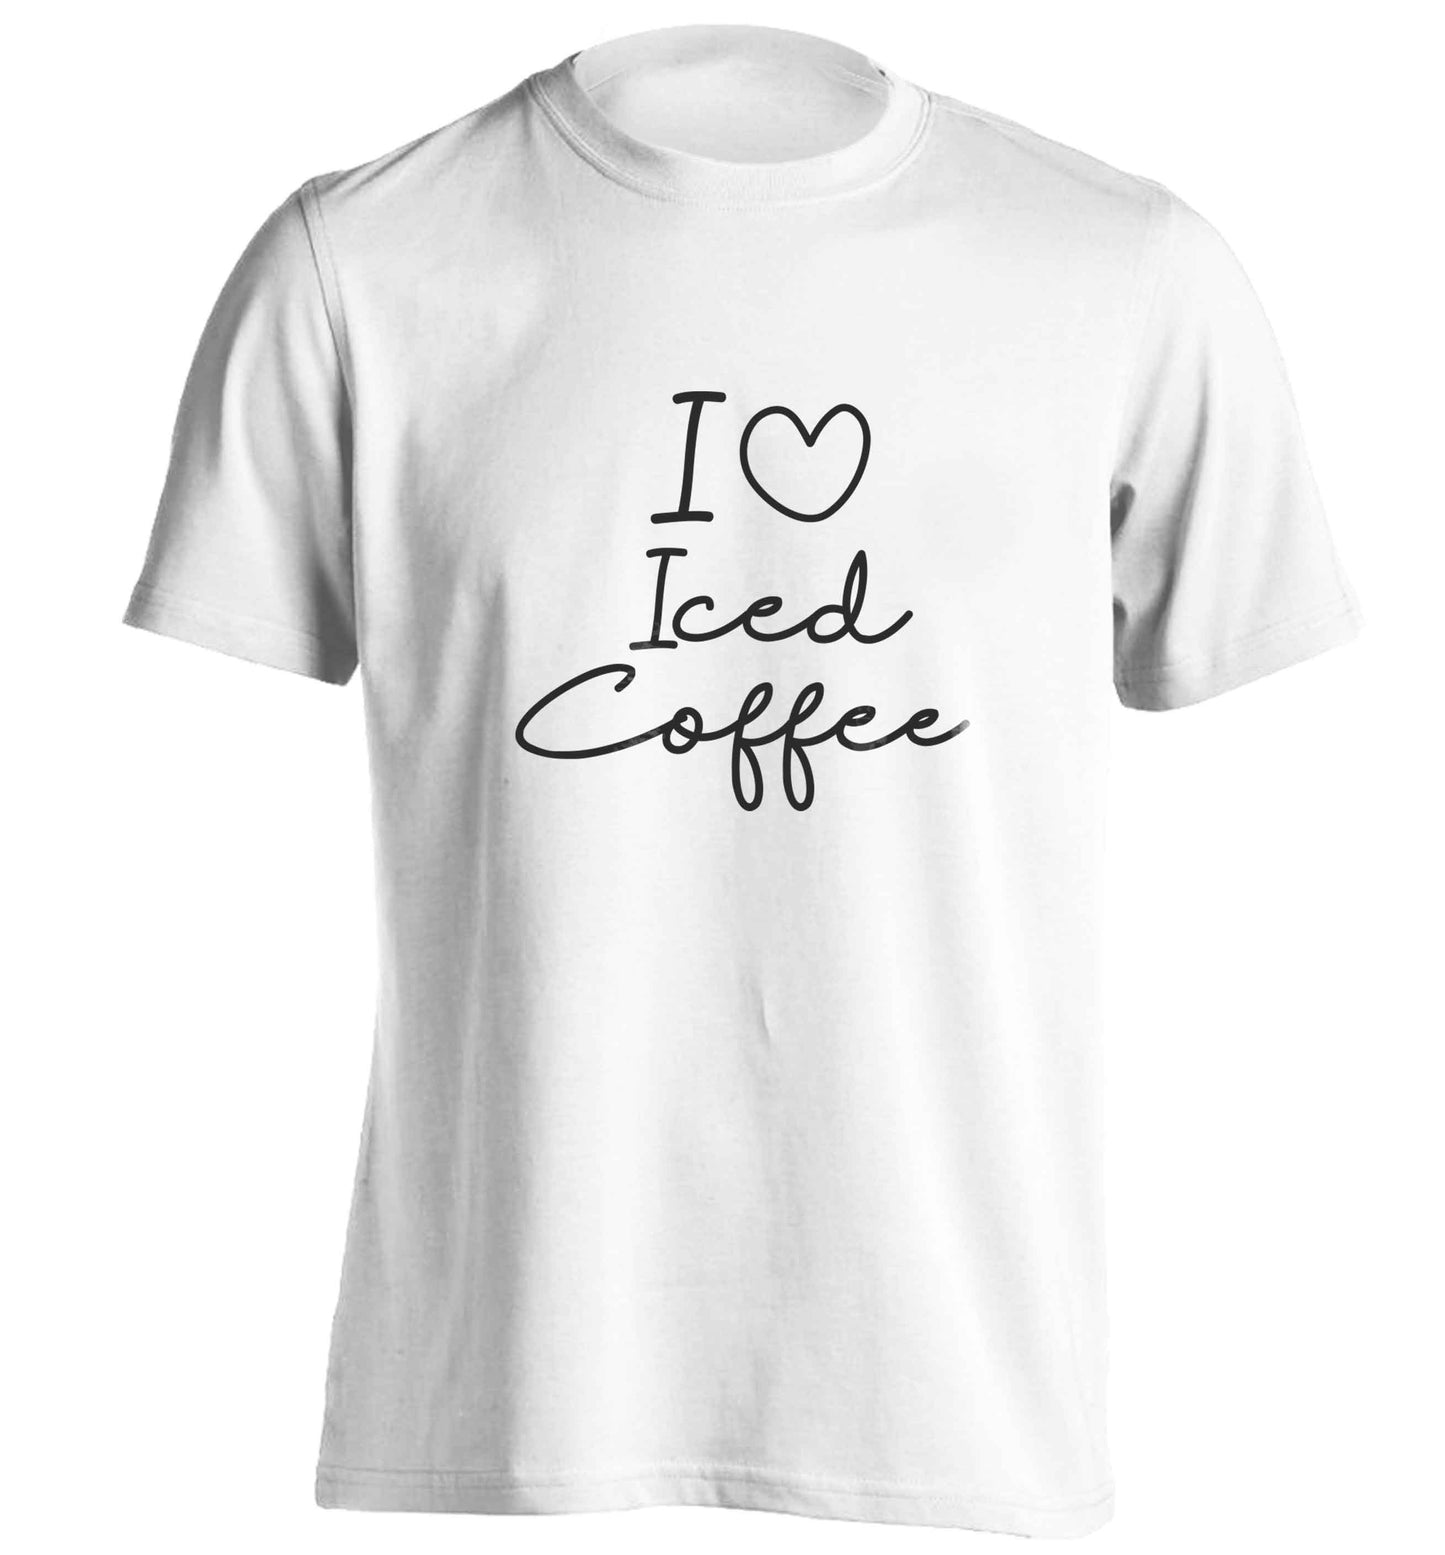 I love iced coffee adults unisex white Tshirt 2XL